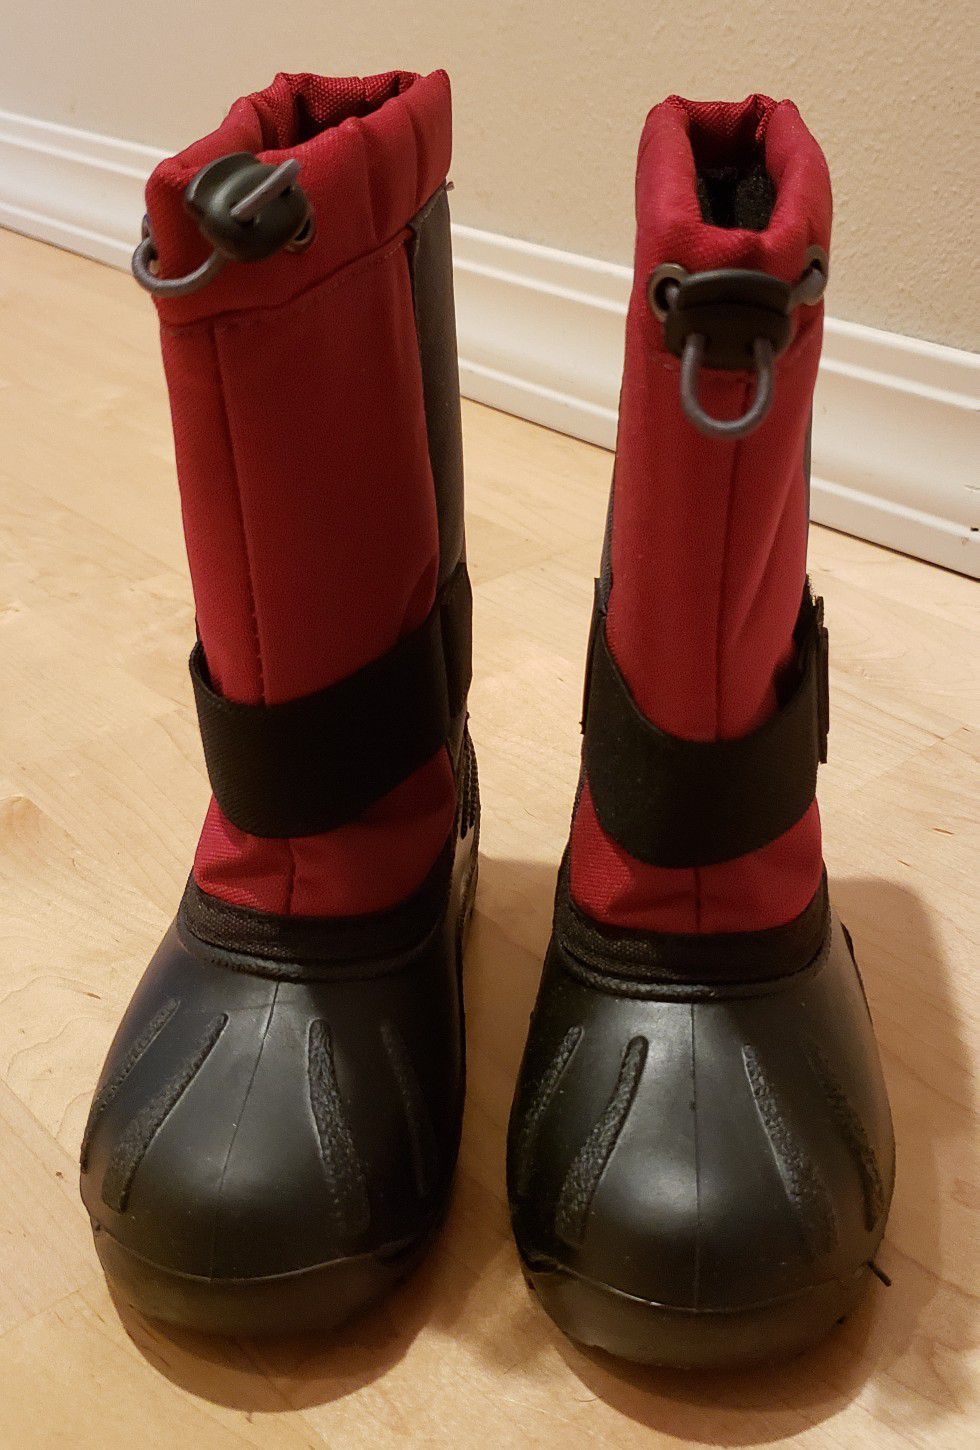 Brand new Kamik toddler snow boots